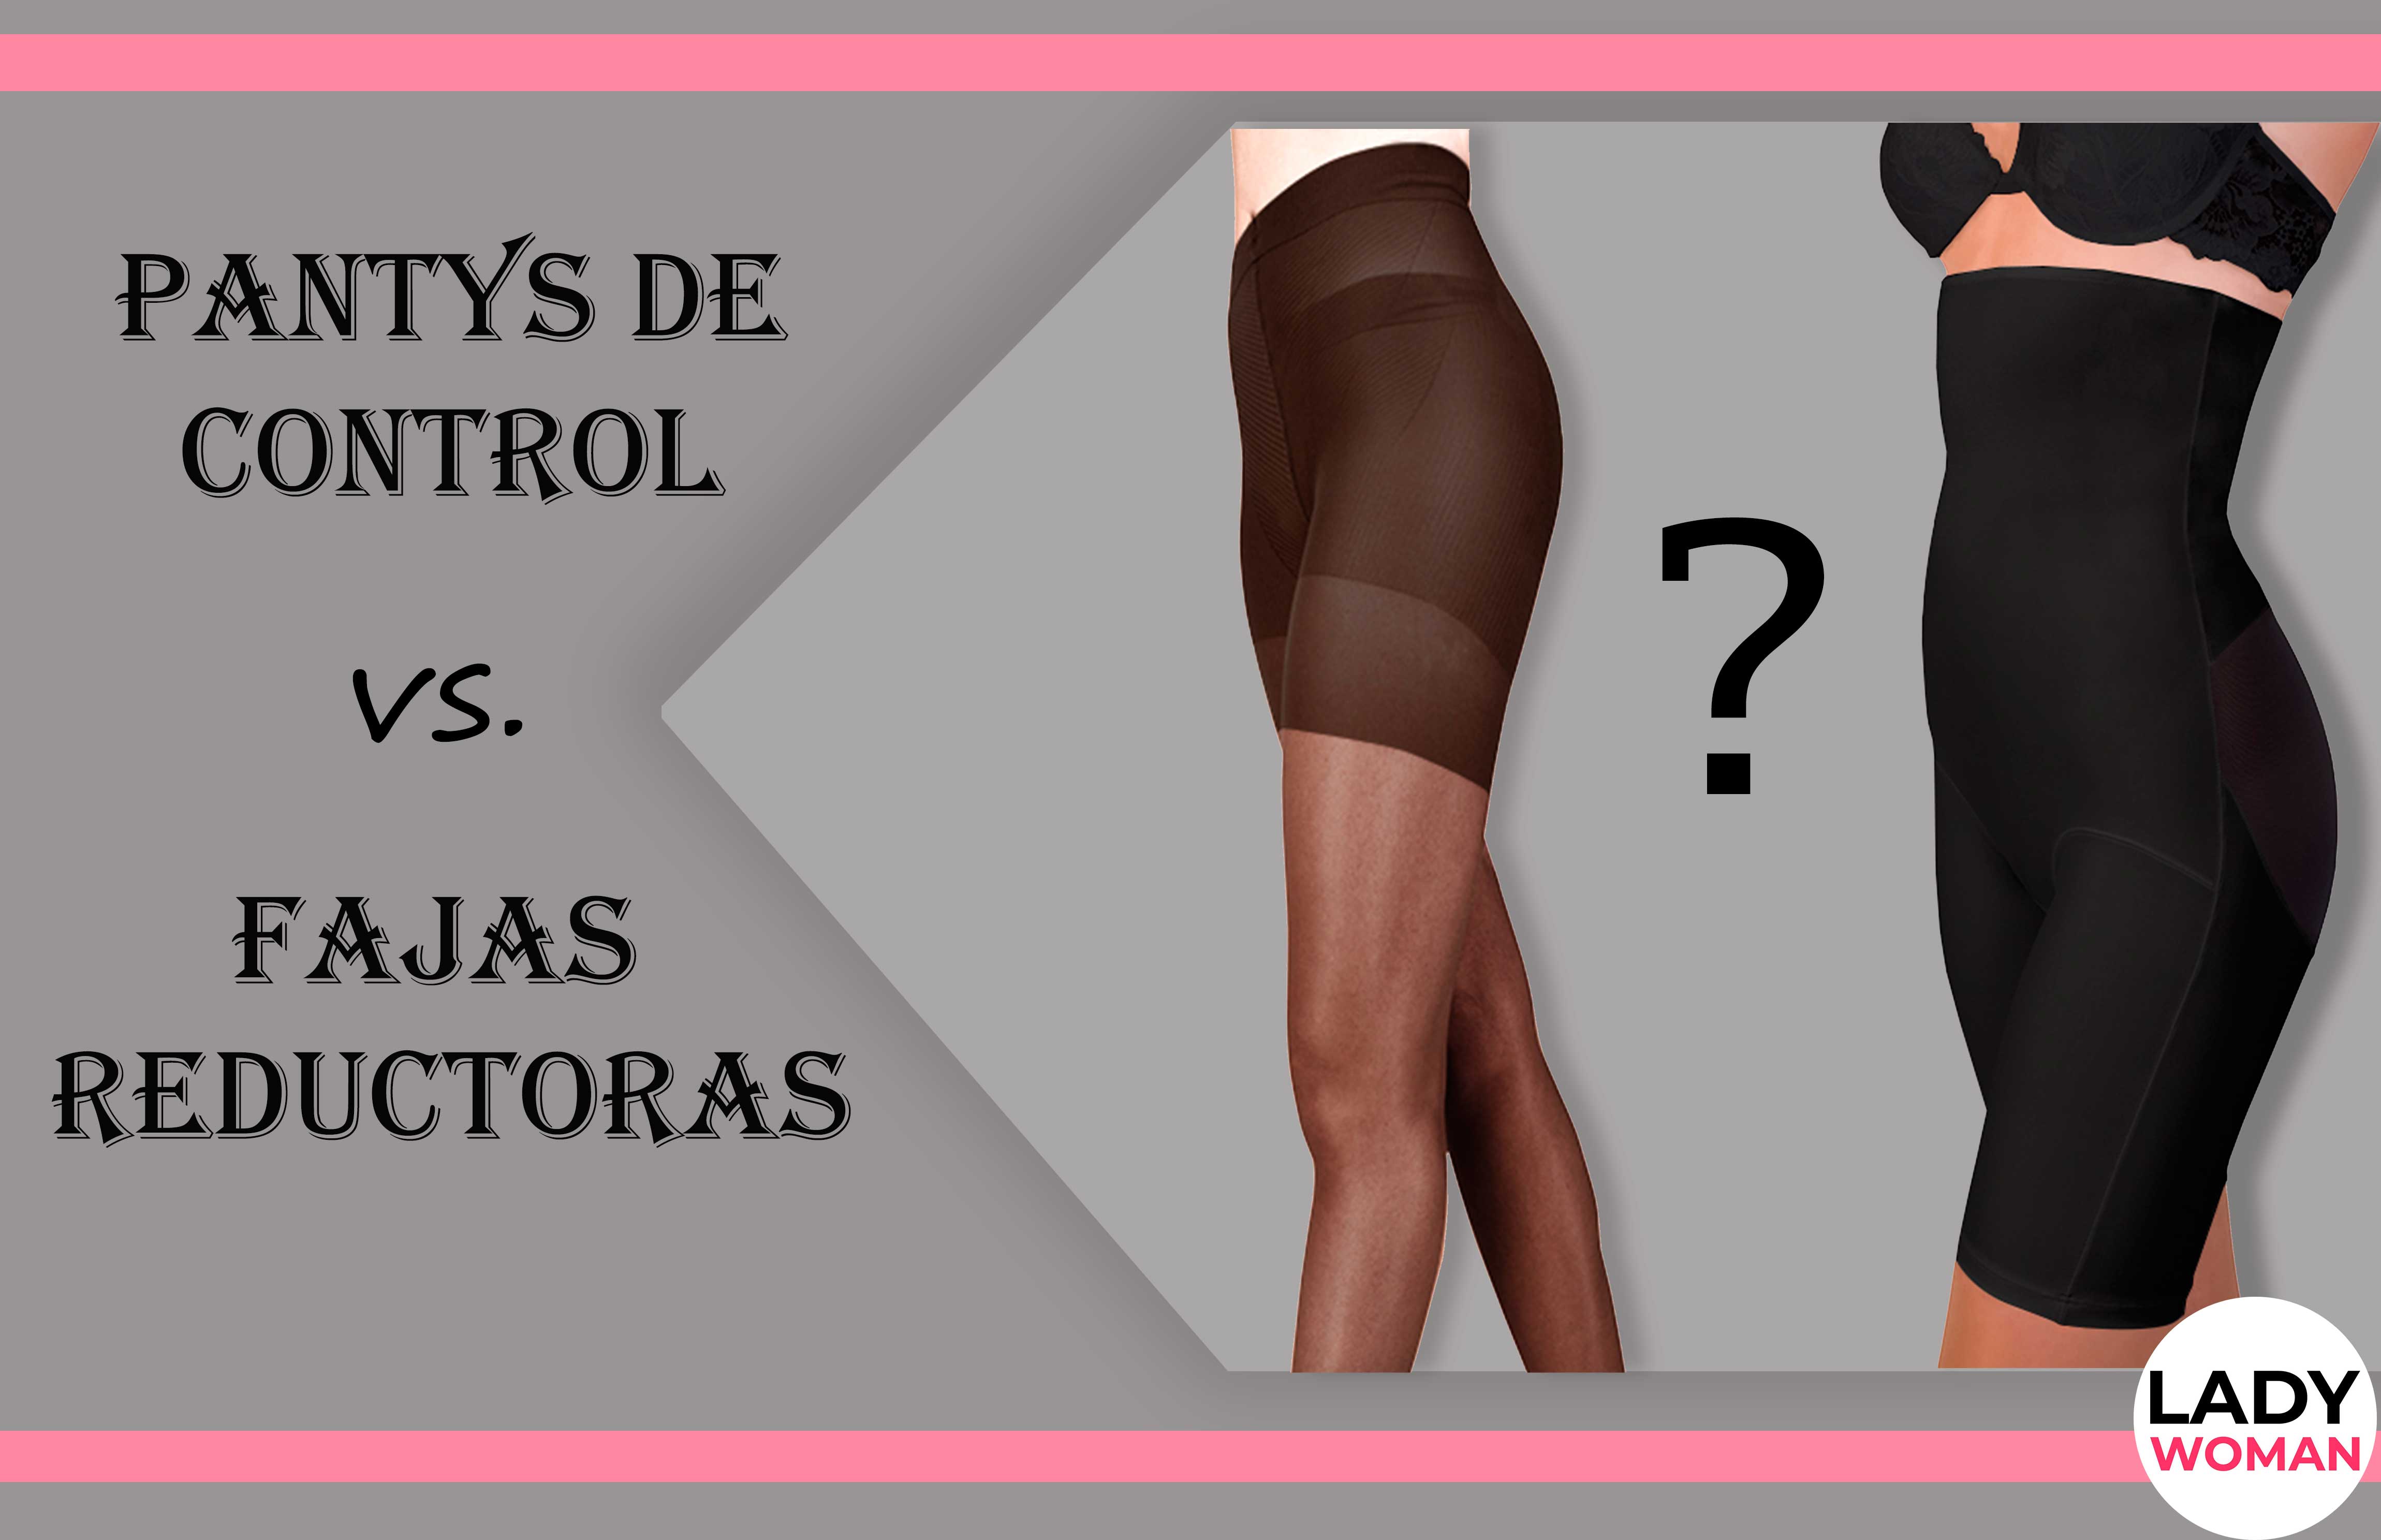 Pantys de control vs. fajas reductoras - Blog Ladywoman.com